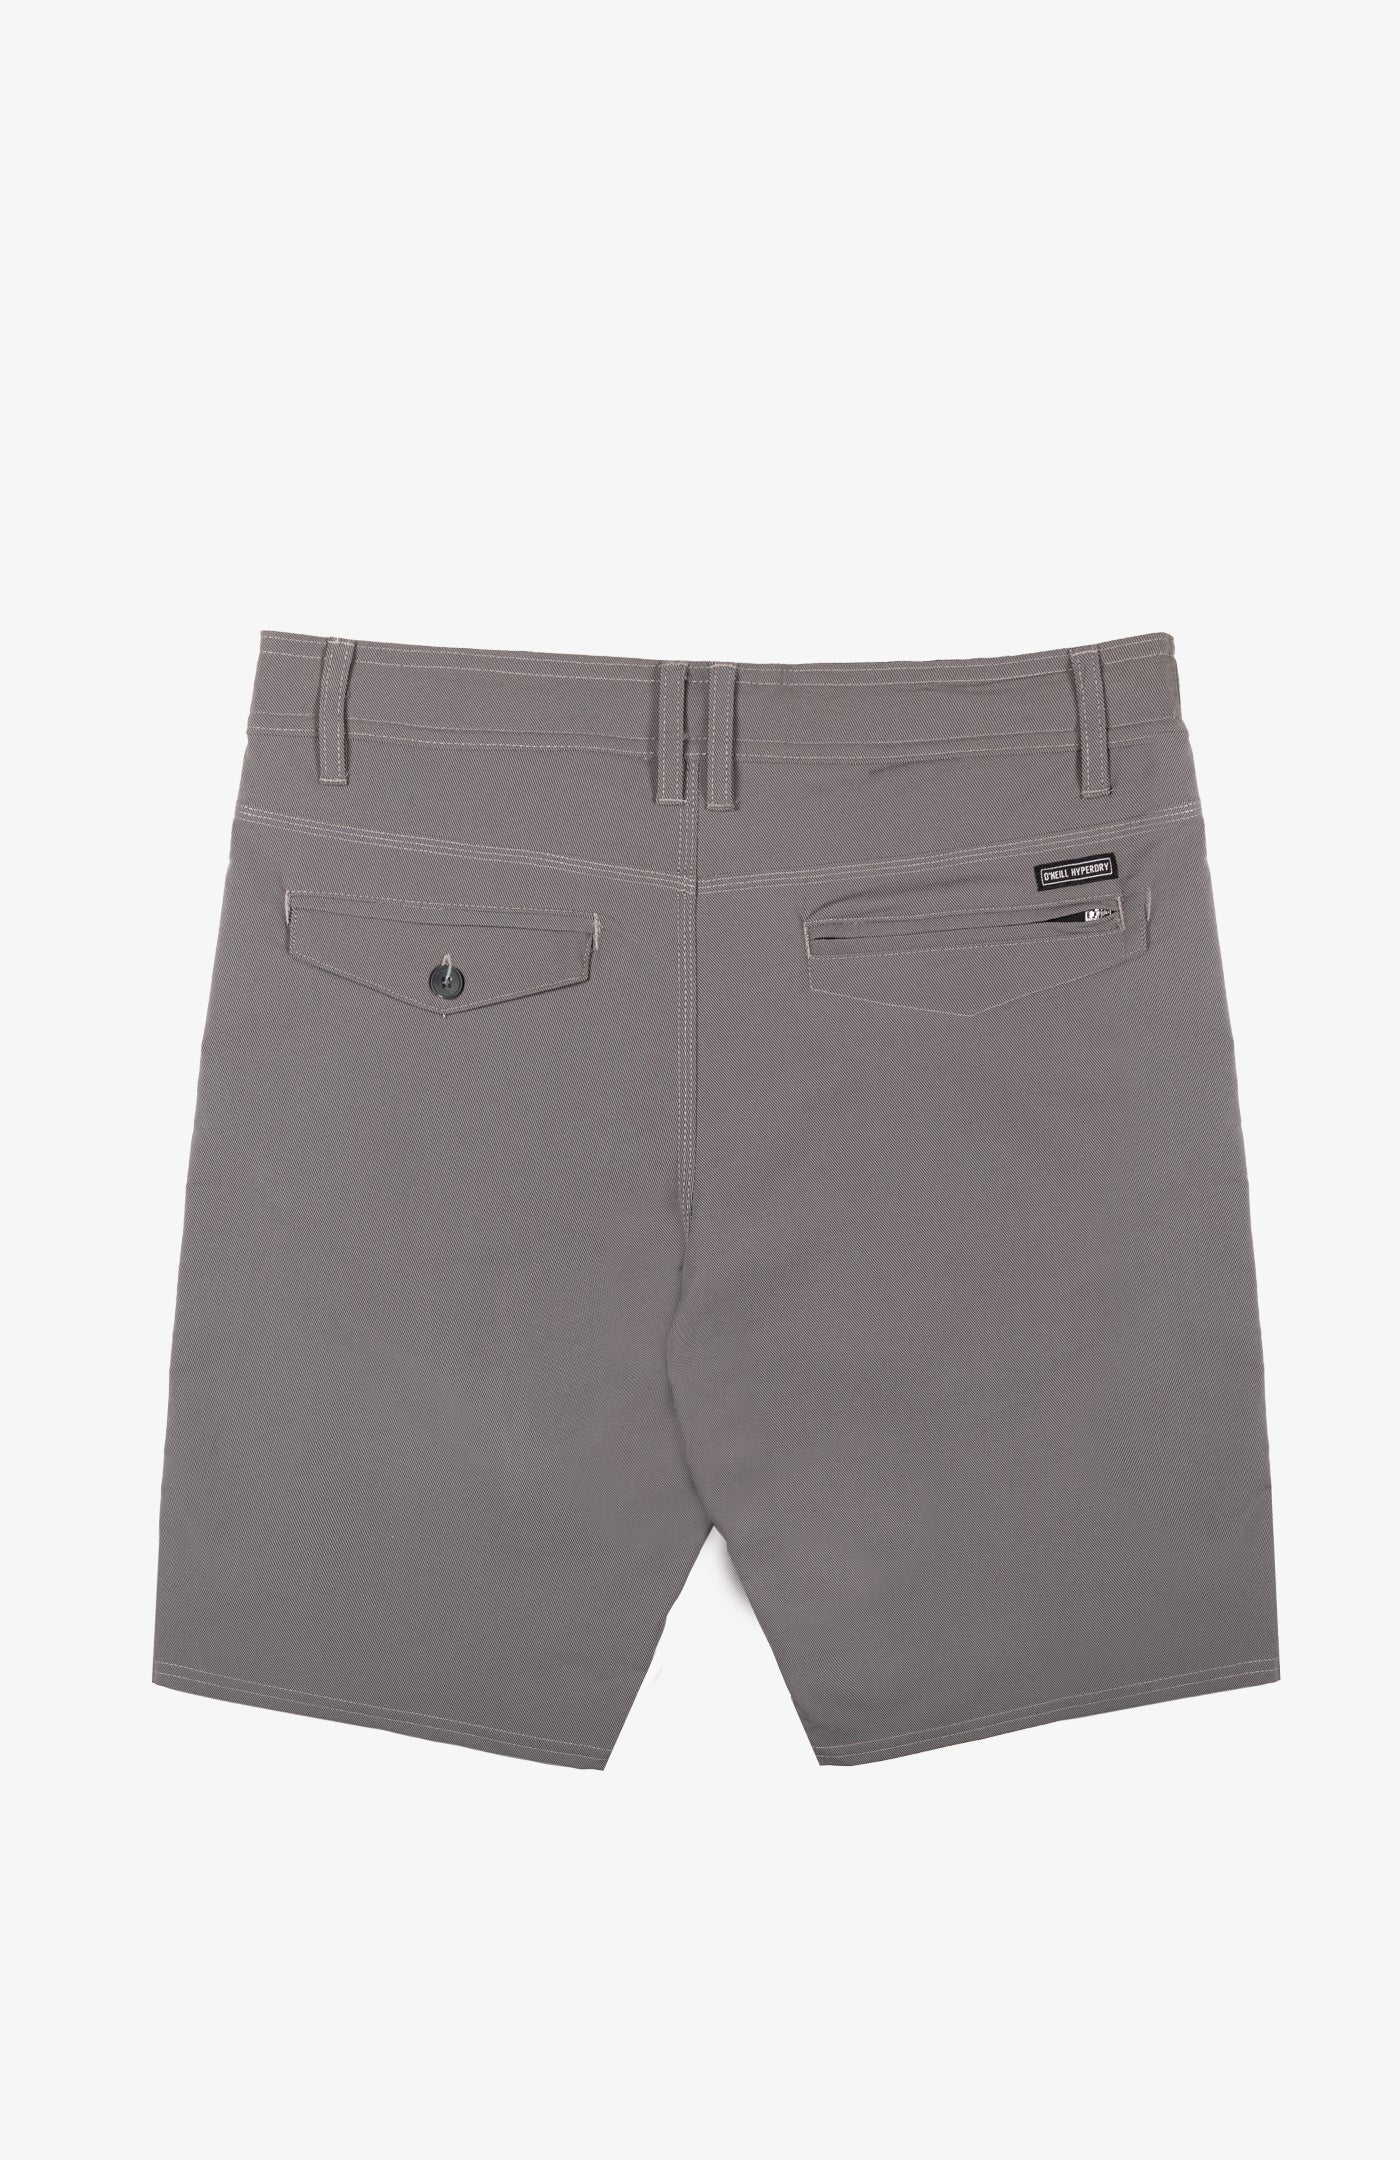 Black Ocelot Hybrid Shorts - Men